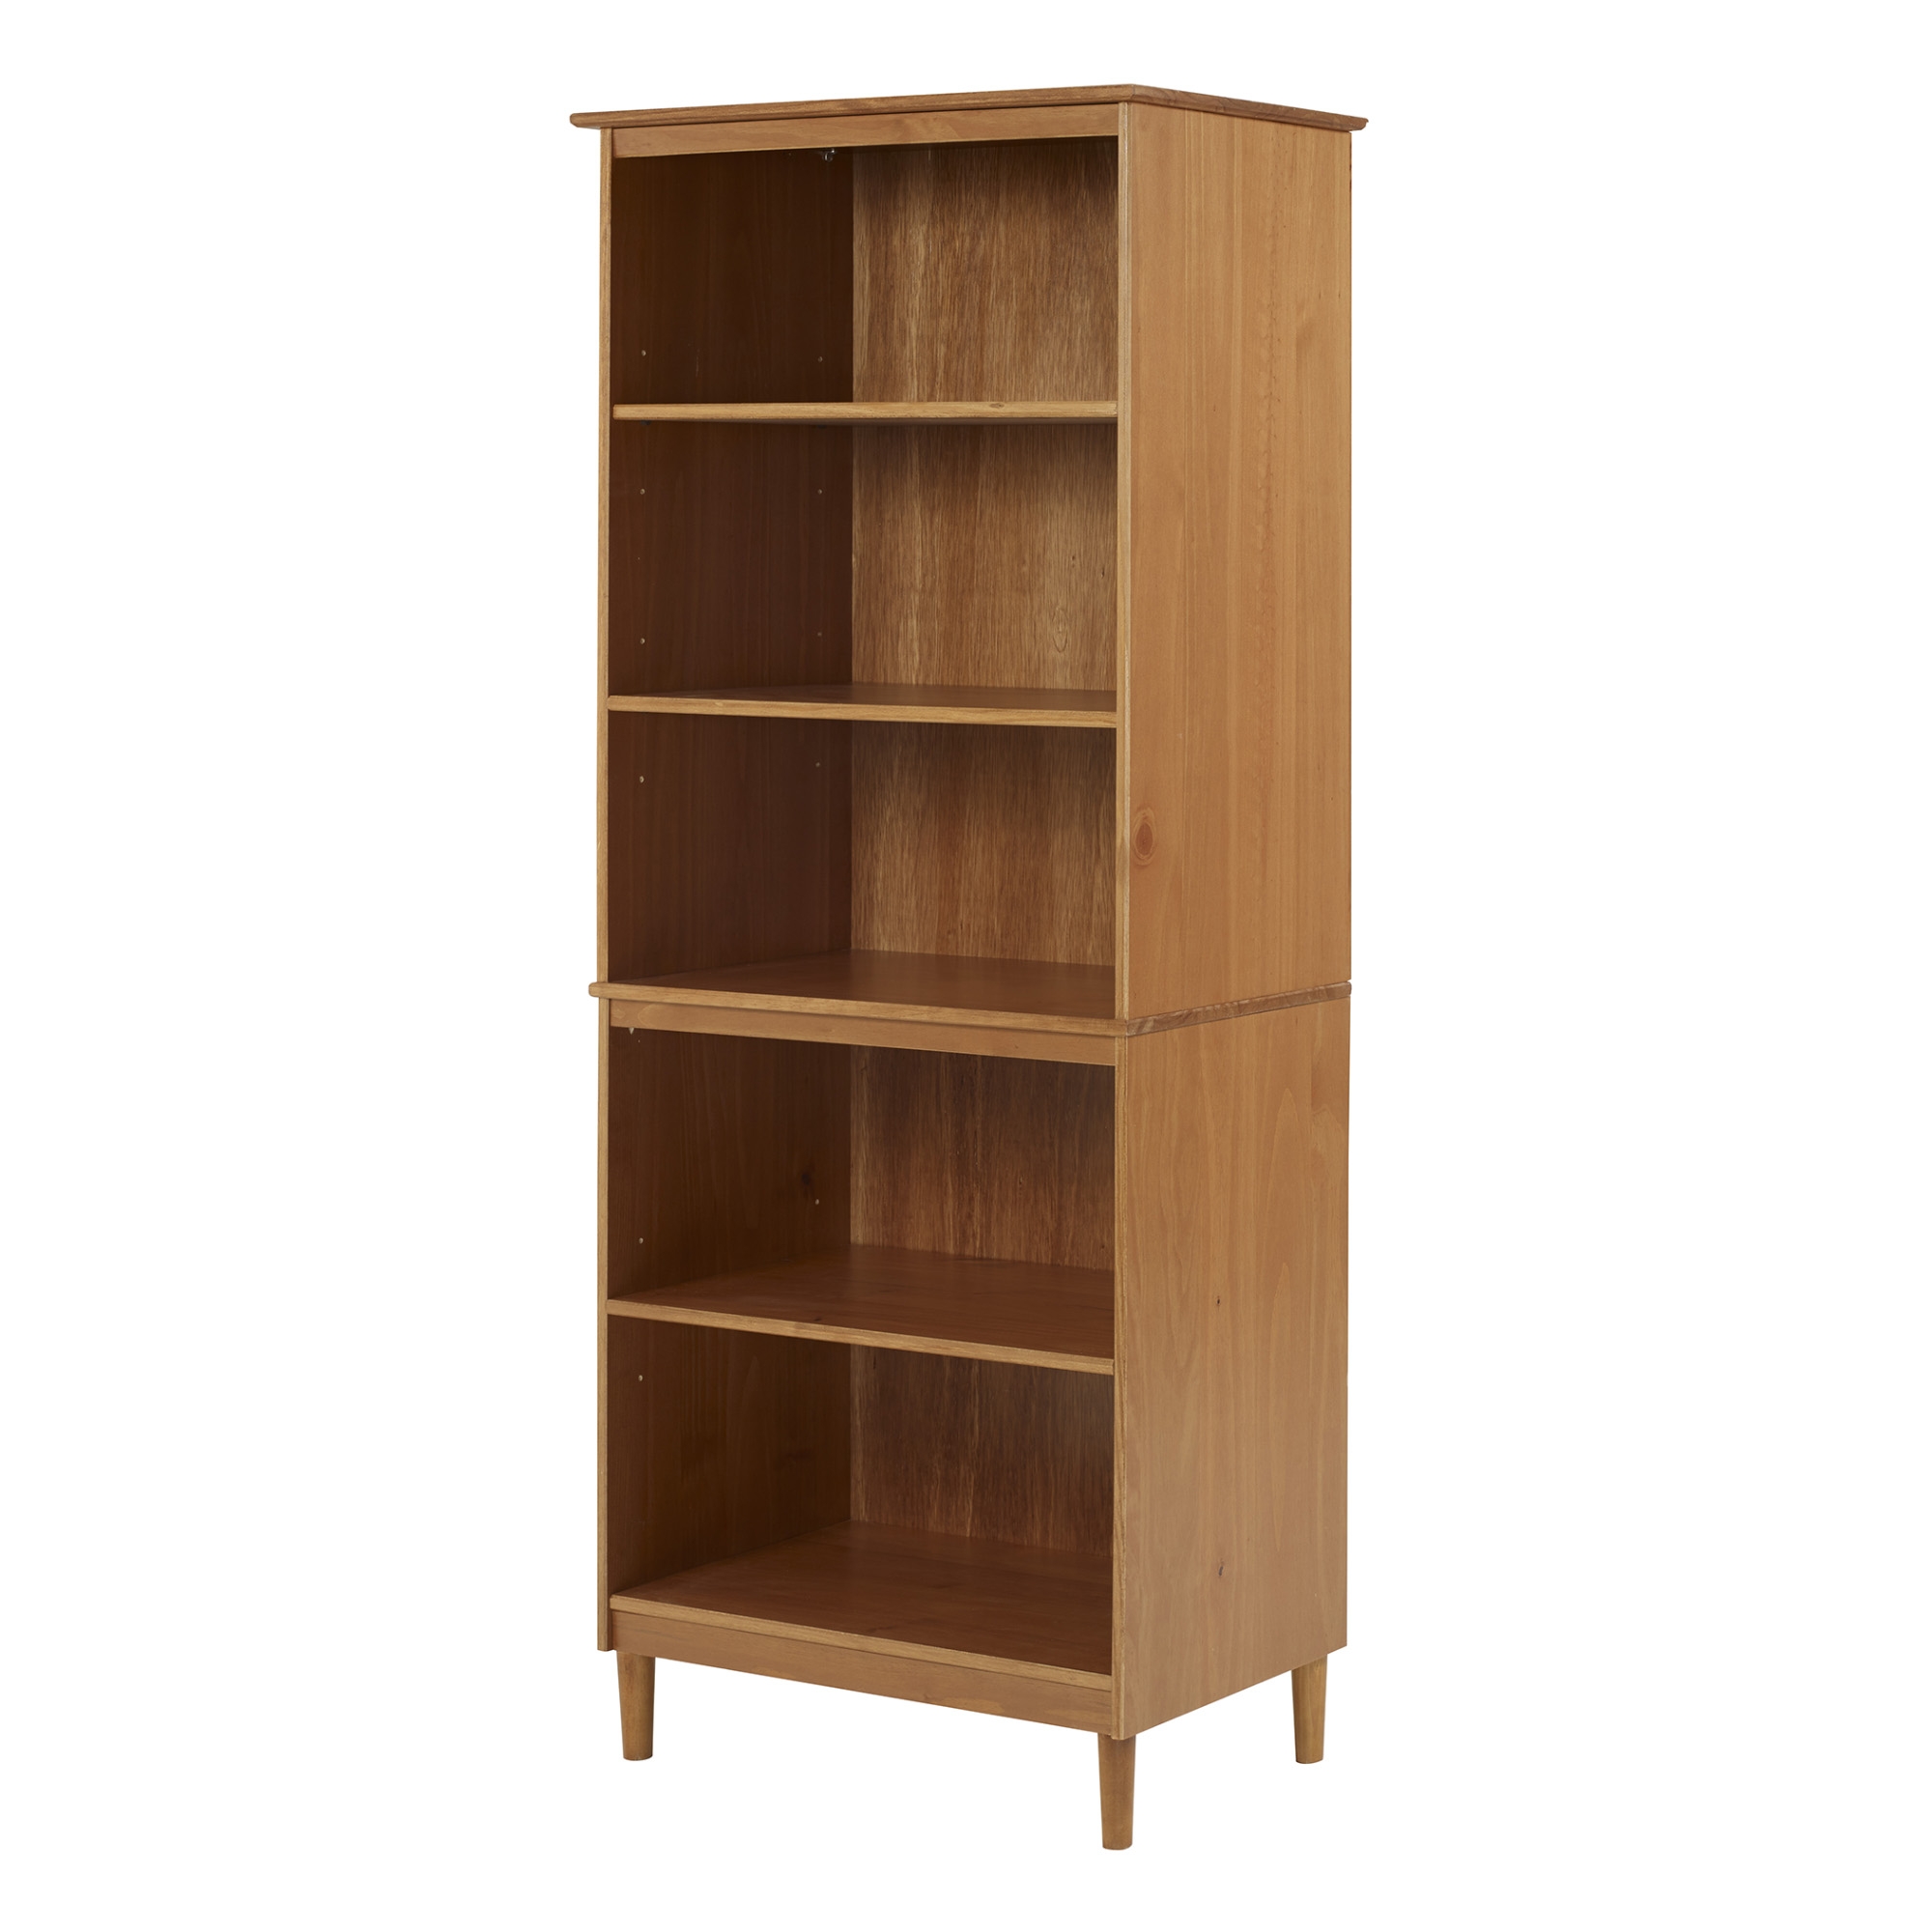 Spencer Wood Bookcase, Caramel - Image 2